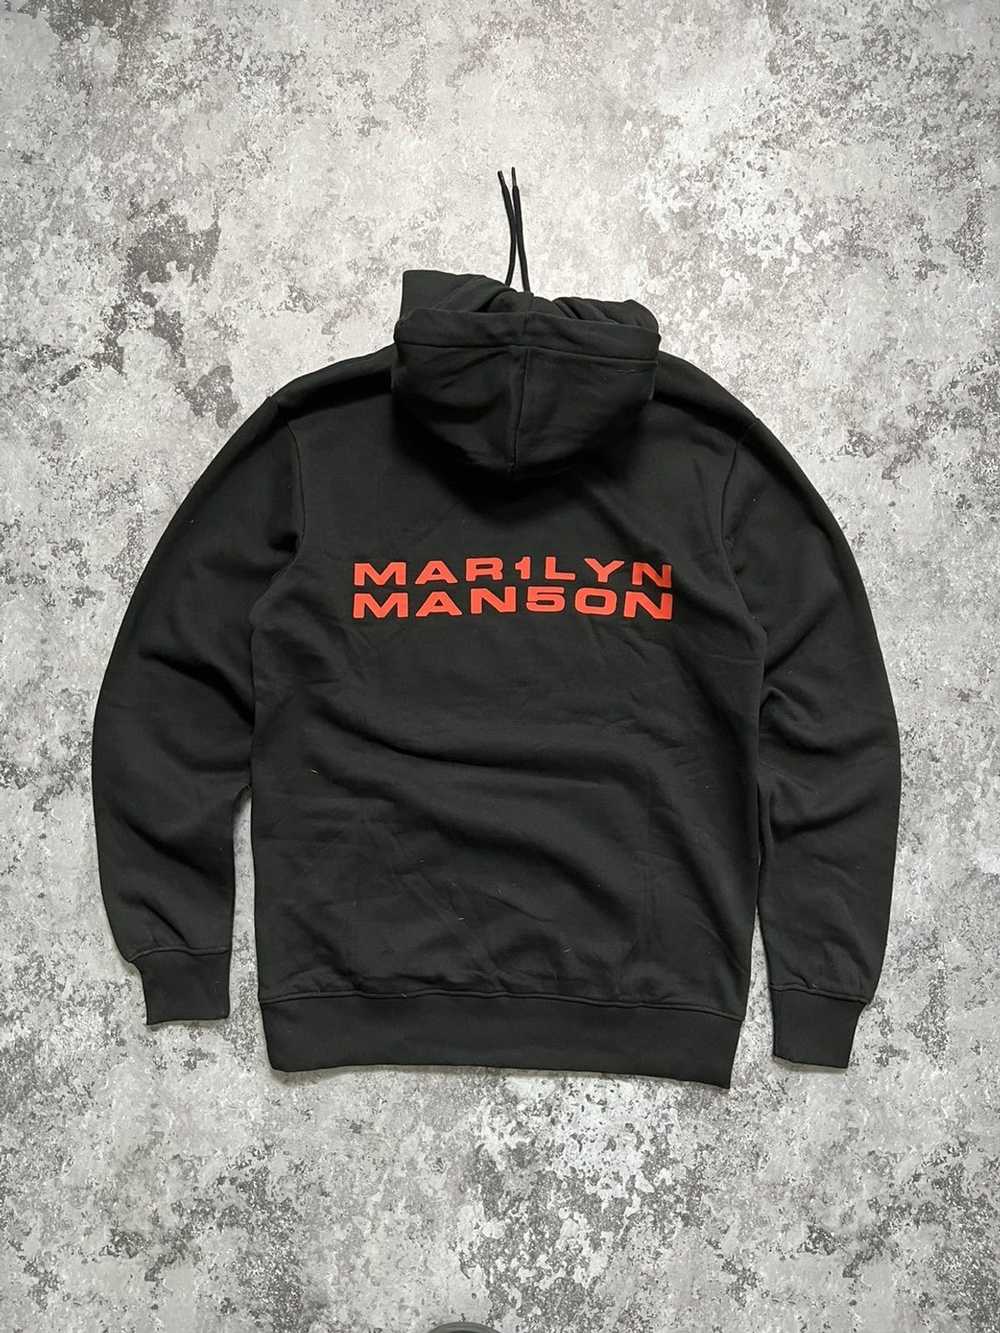 Marilyn Manson × Streetwear Marilyn Manson Hoodie - image 4